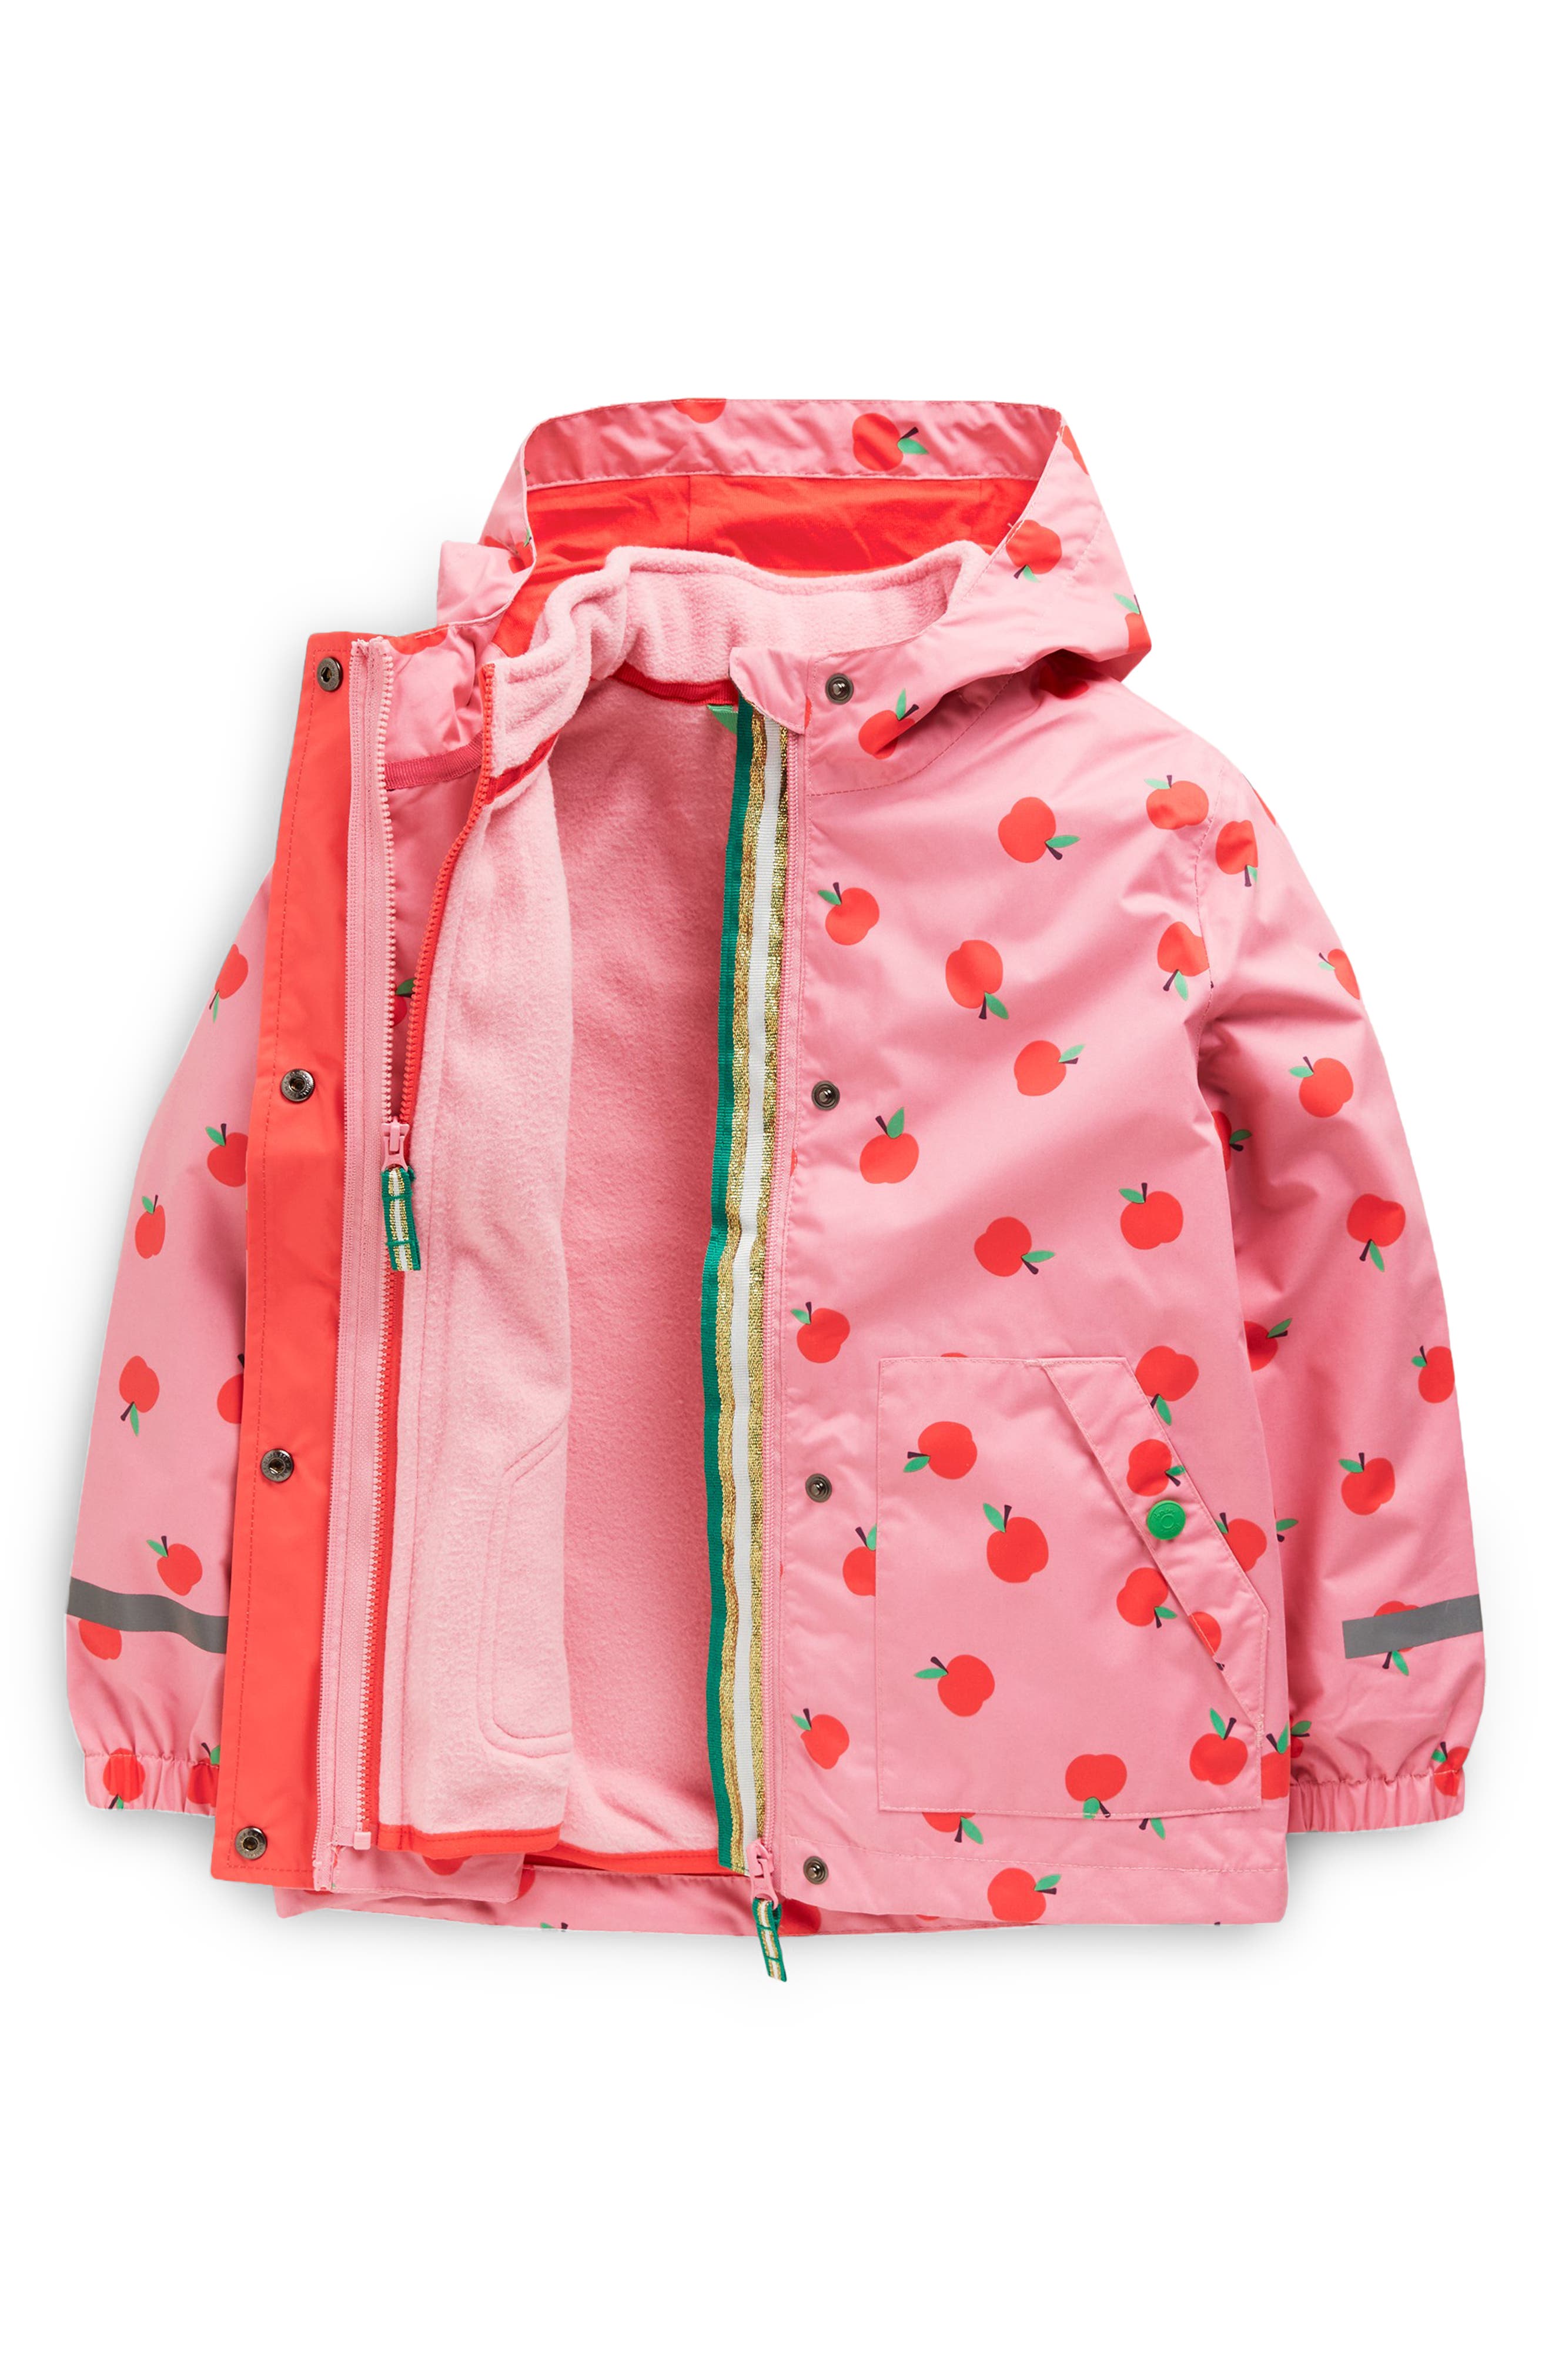 Mini Boden Kids' 3-in-1 Waterproof Jacket in Formica Pink Apples